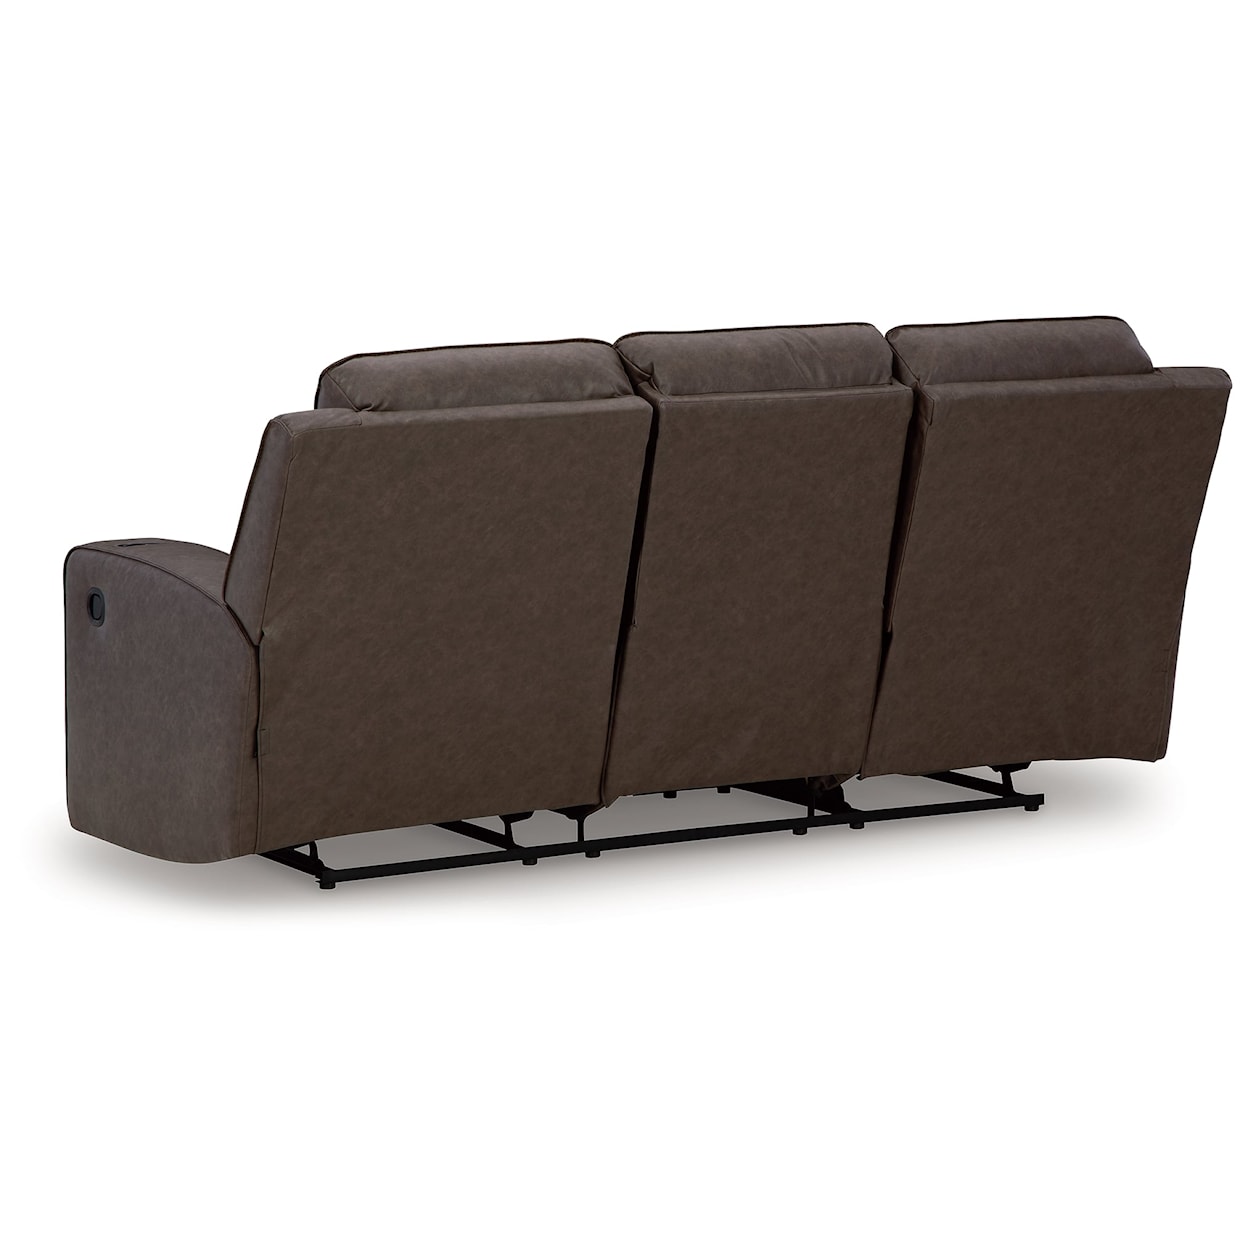 Ashley Furniture Signature Design Lavenhorne Reclining Sofa w/Drop Down Table